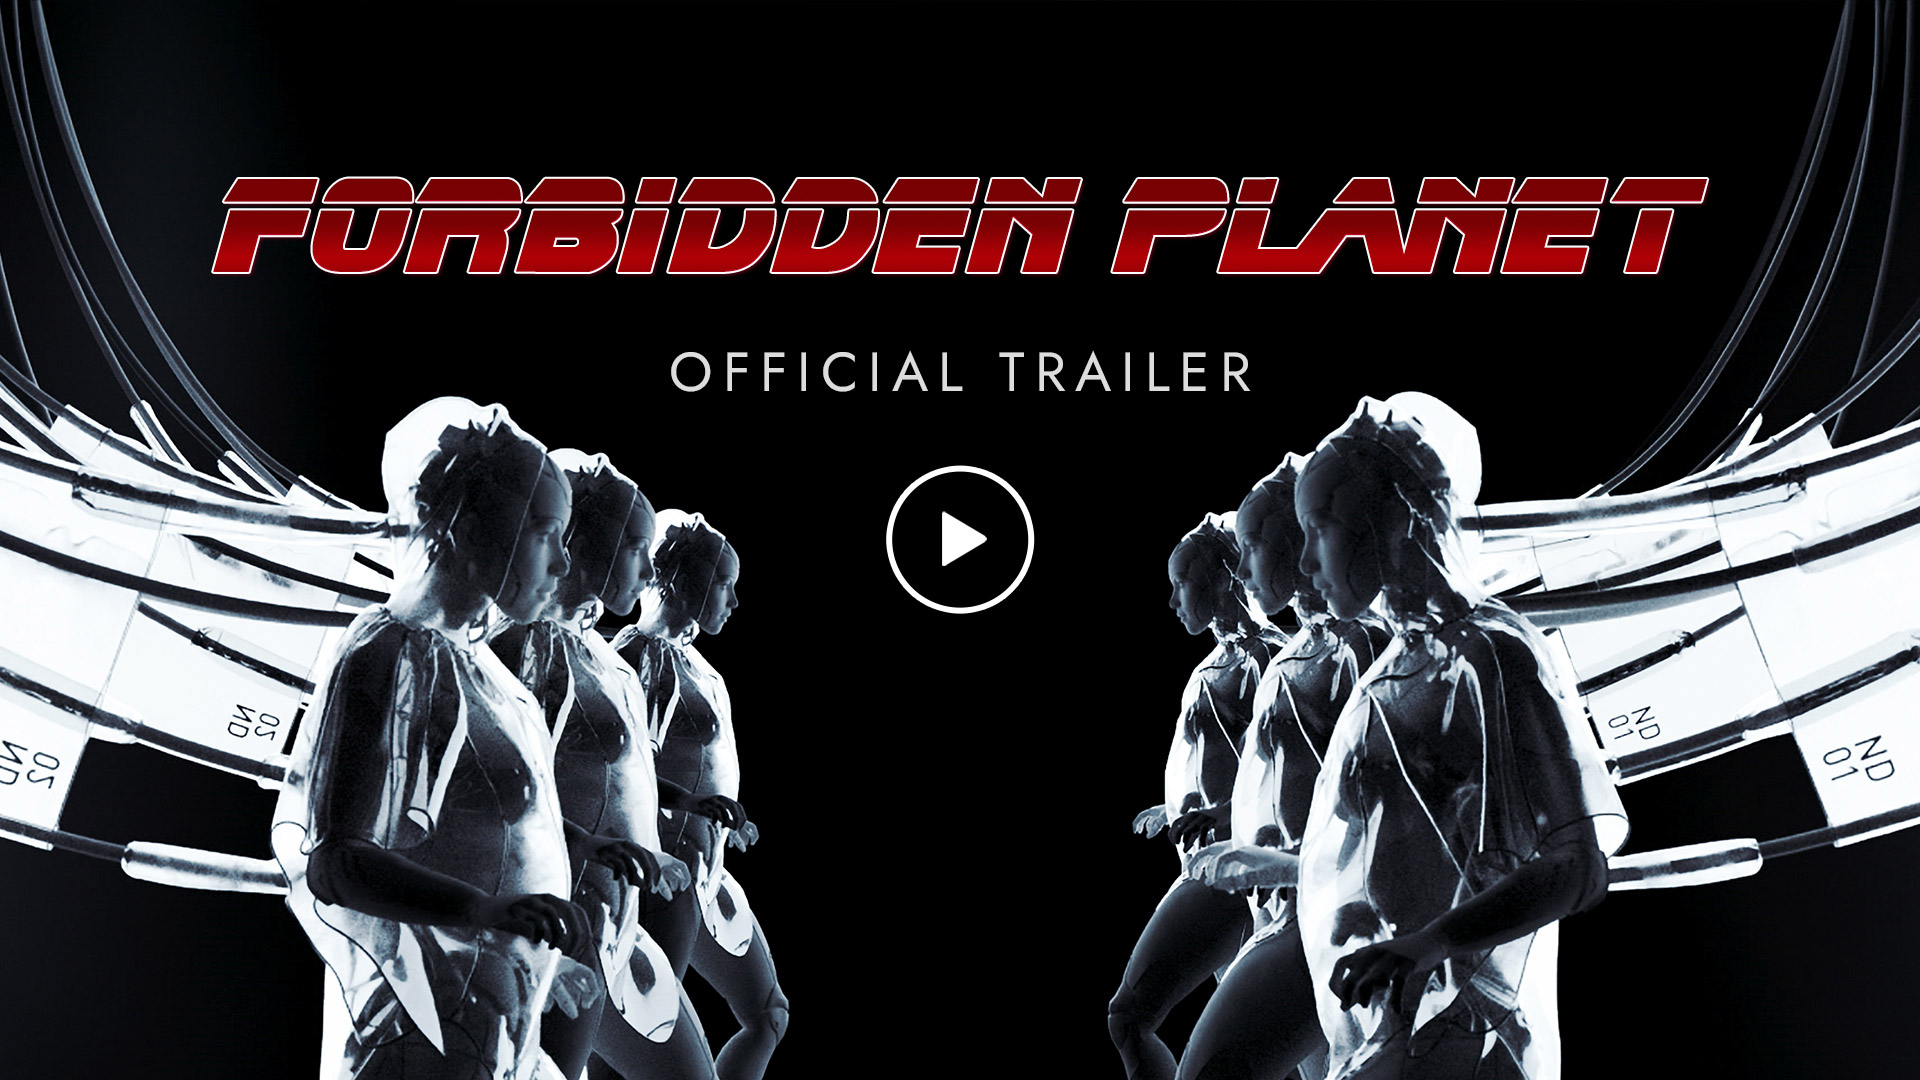 Watch the Forbidden Planet Trailer